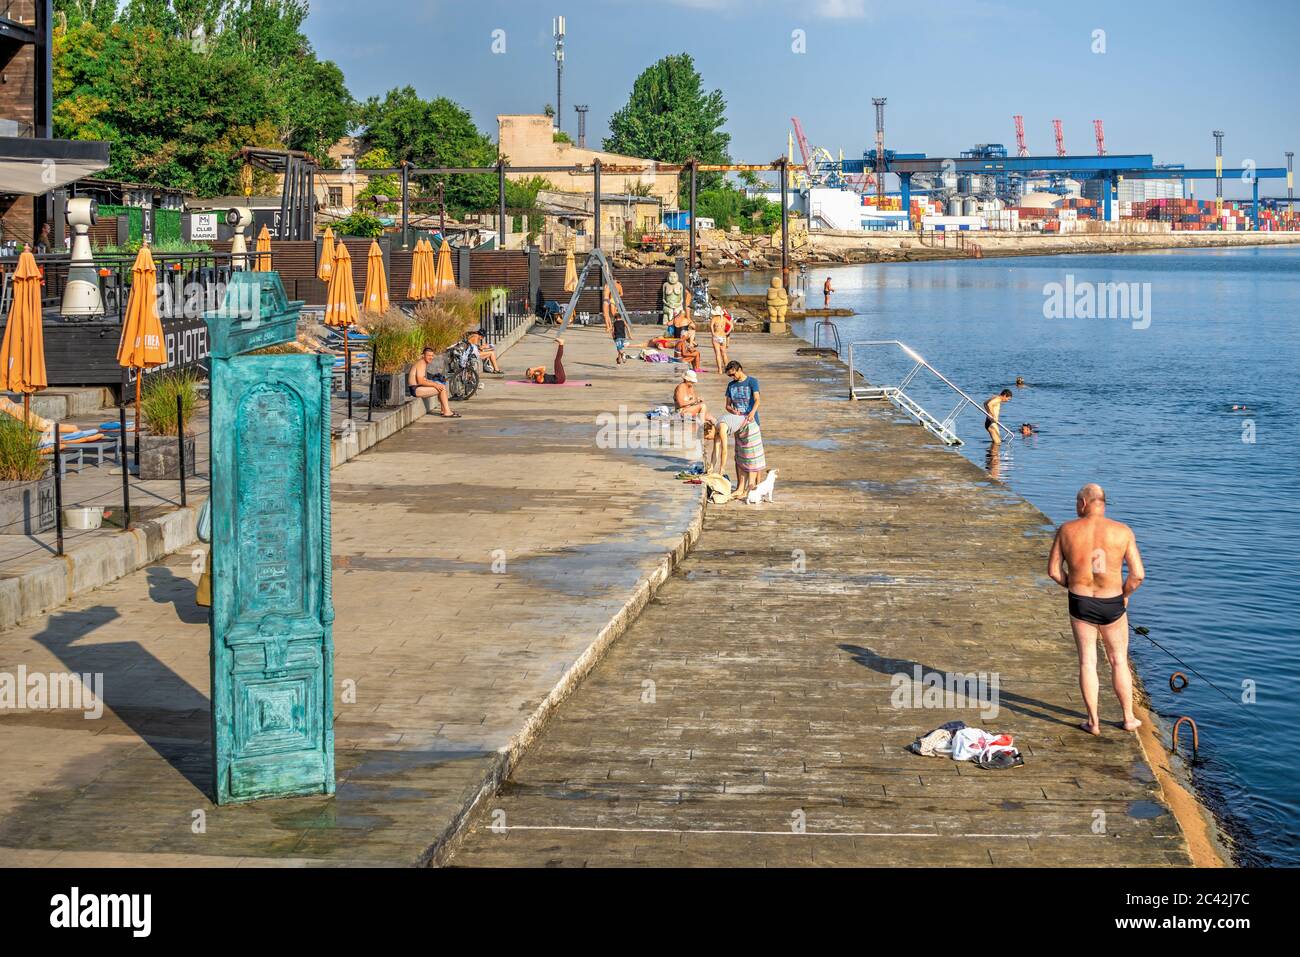 Odessa, Ukraine 09.03.2019. Beach hotels, restaurants and entertainment on Langeron Beach in Odessa, Ukraine, on a sunny summer day Stock Photo